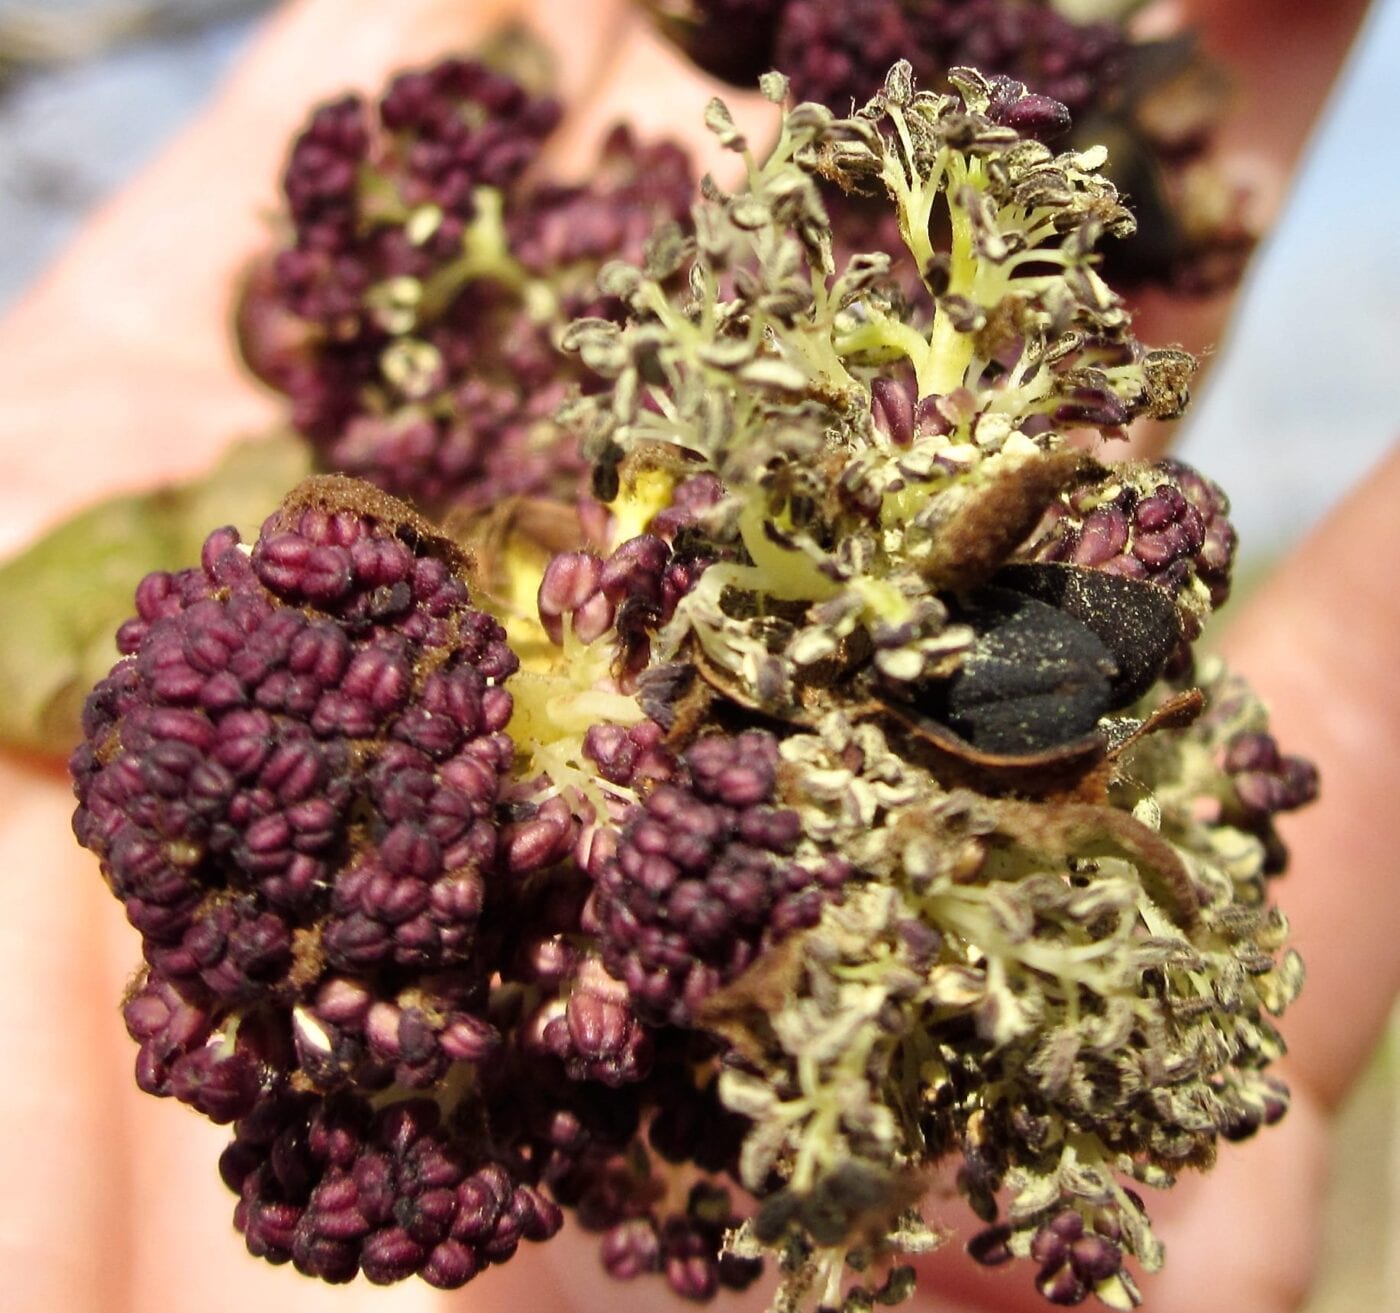 common ash tree male flowers releasing pollen